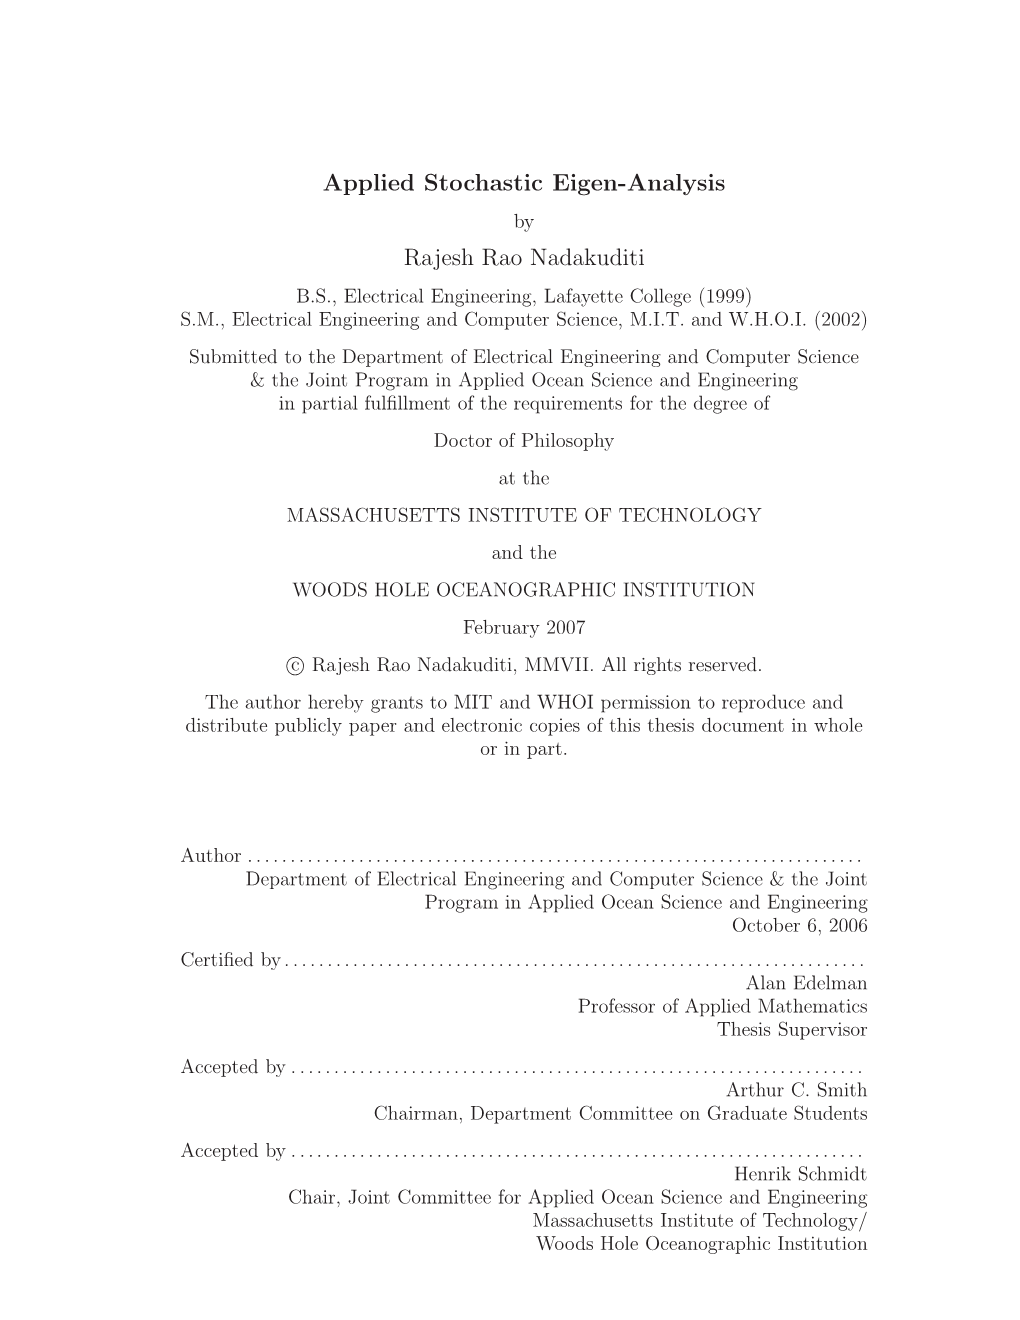 Applied Stochastic Eigen-Analysis Rajesh Rao Nadakuditi